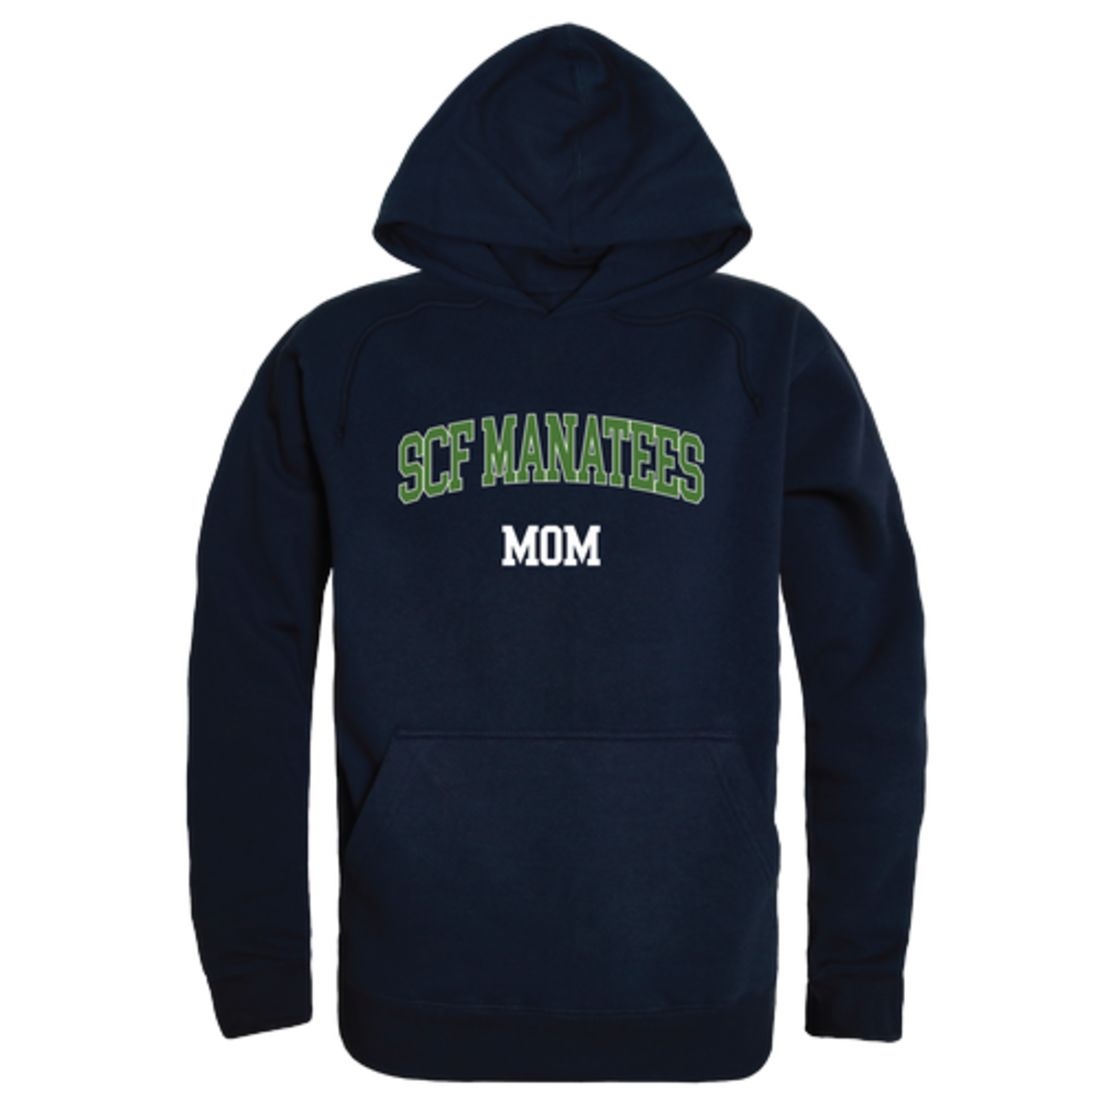 State College of Florida Manatees Mom Fleece Hoodie Sweatshirts